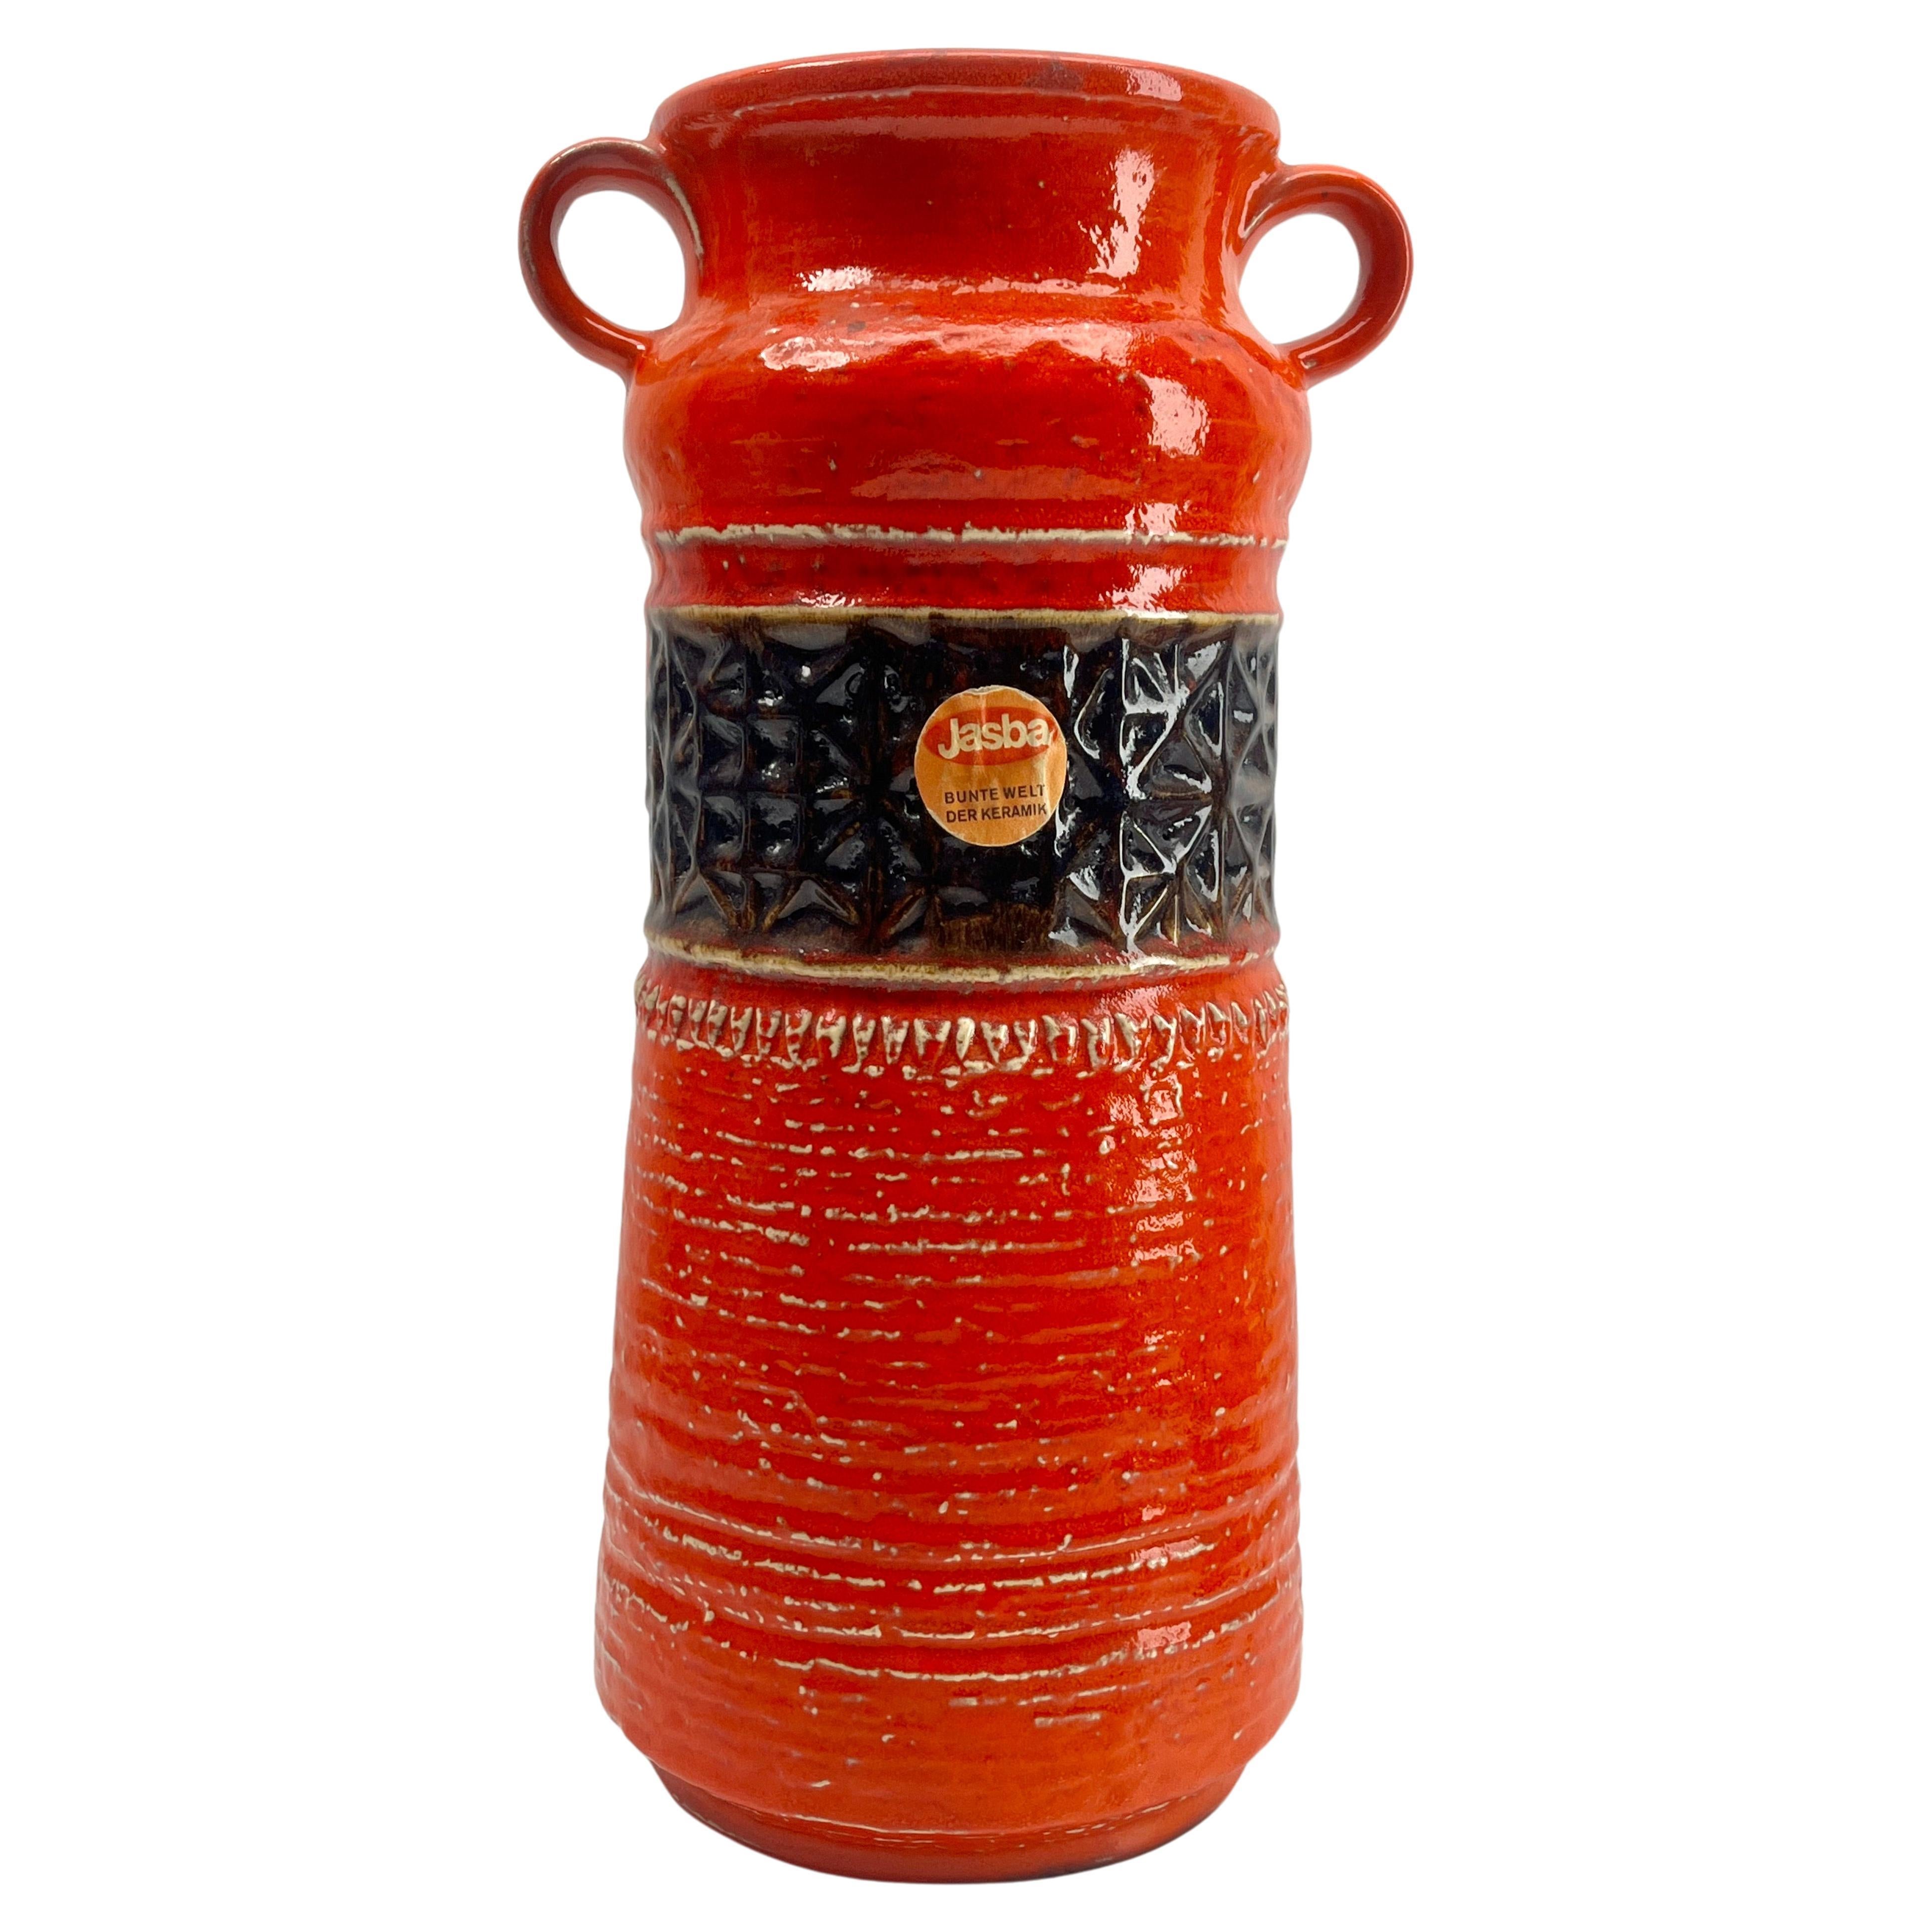 Vase vintage marqué W Germany Label Jasba Ceramic, excellent état